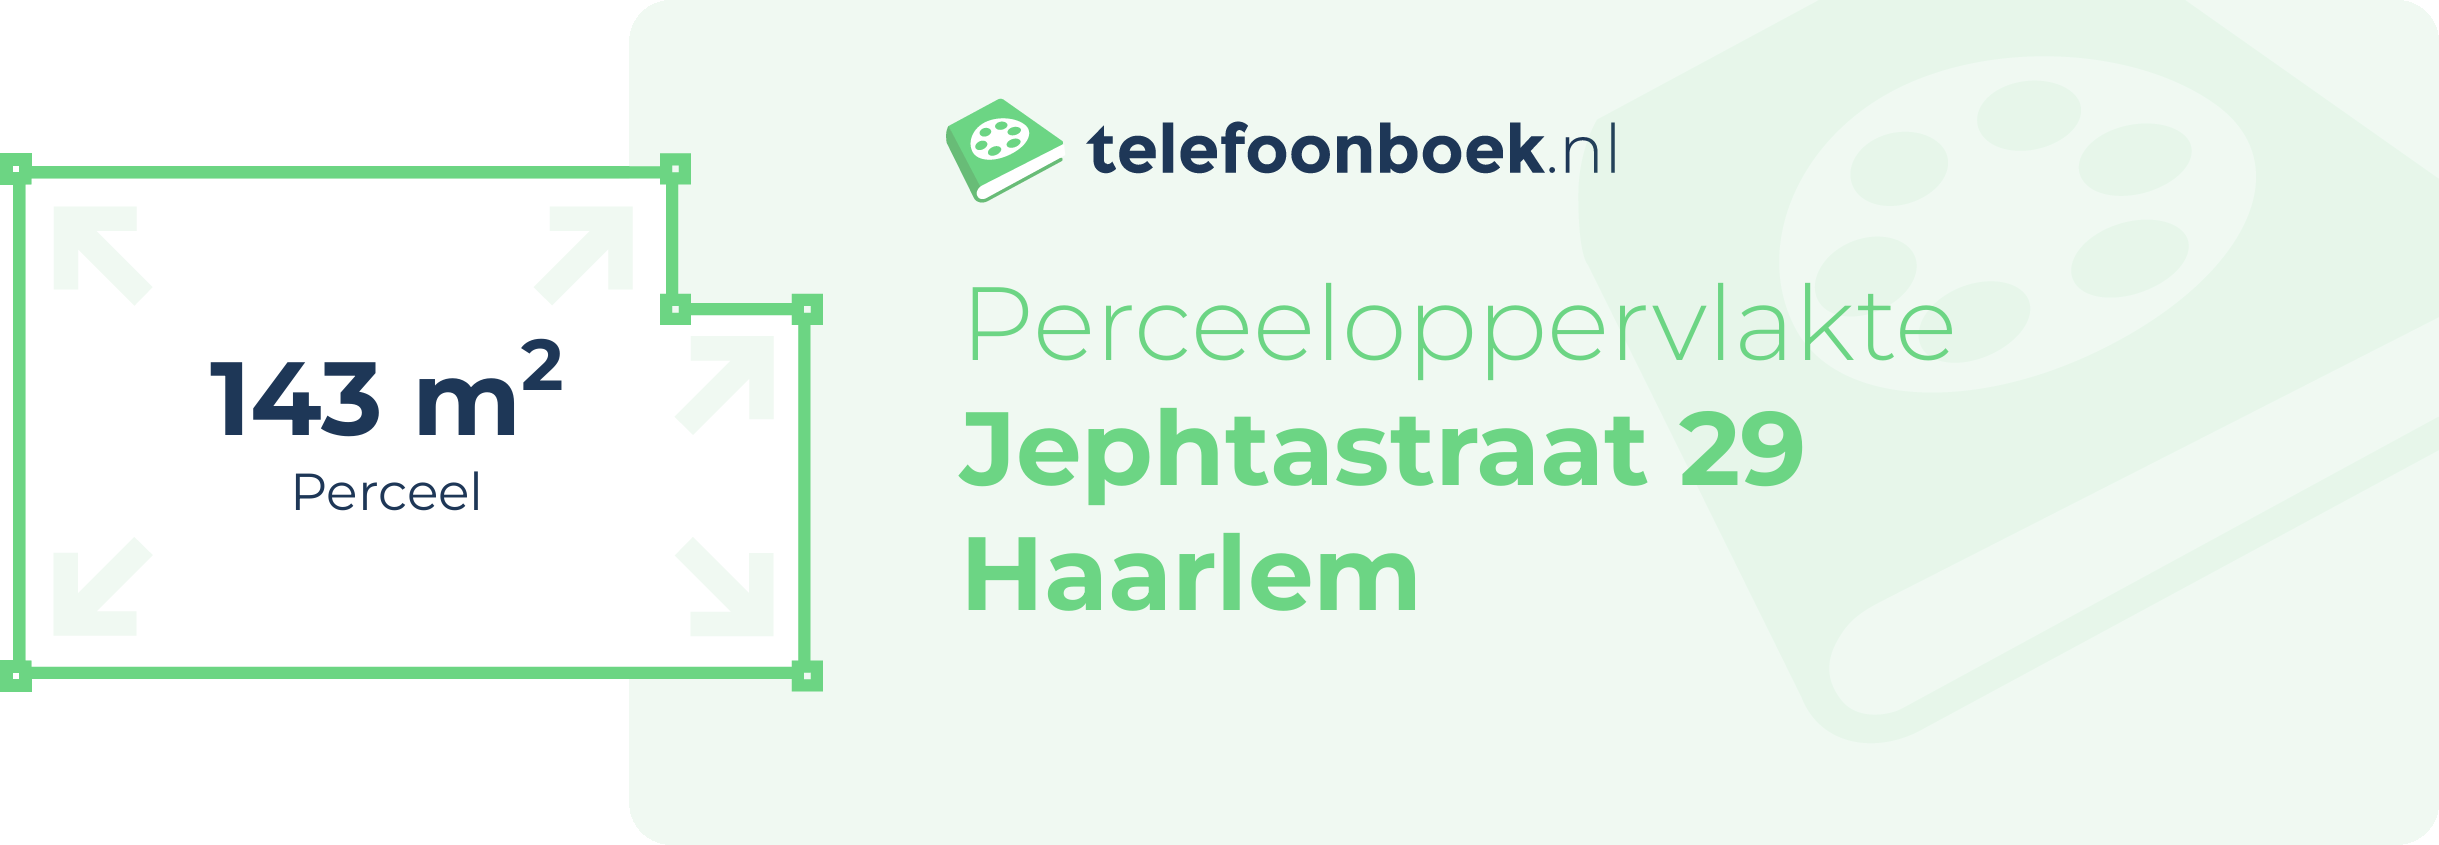 Perceeloppervlakte Jephtastraat 29 Haarlem